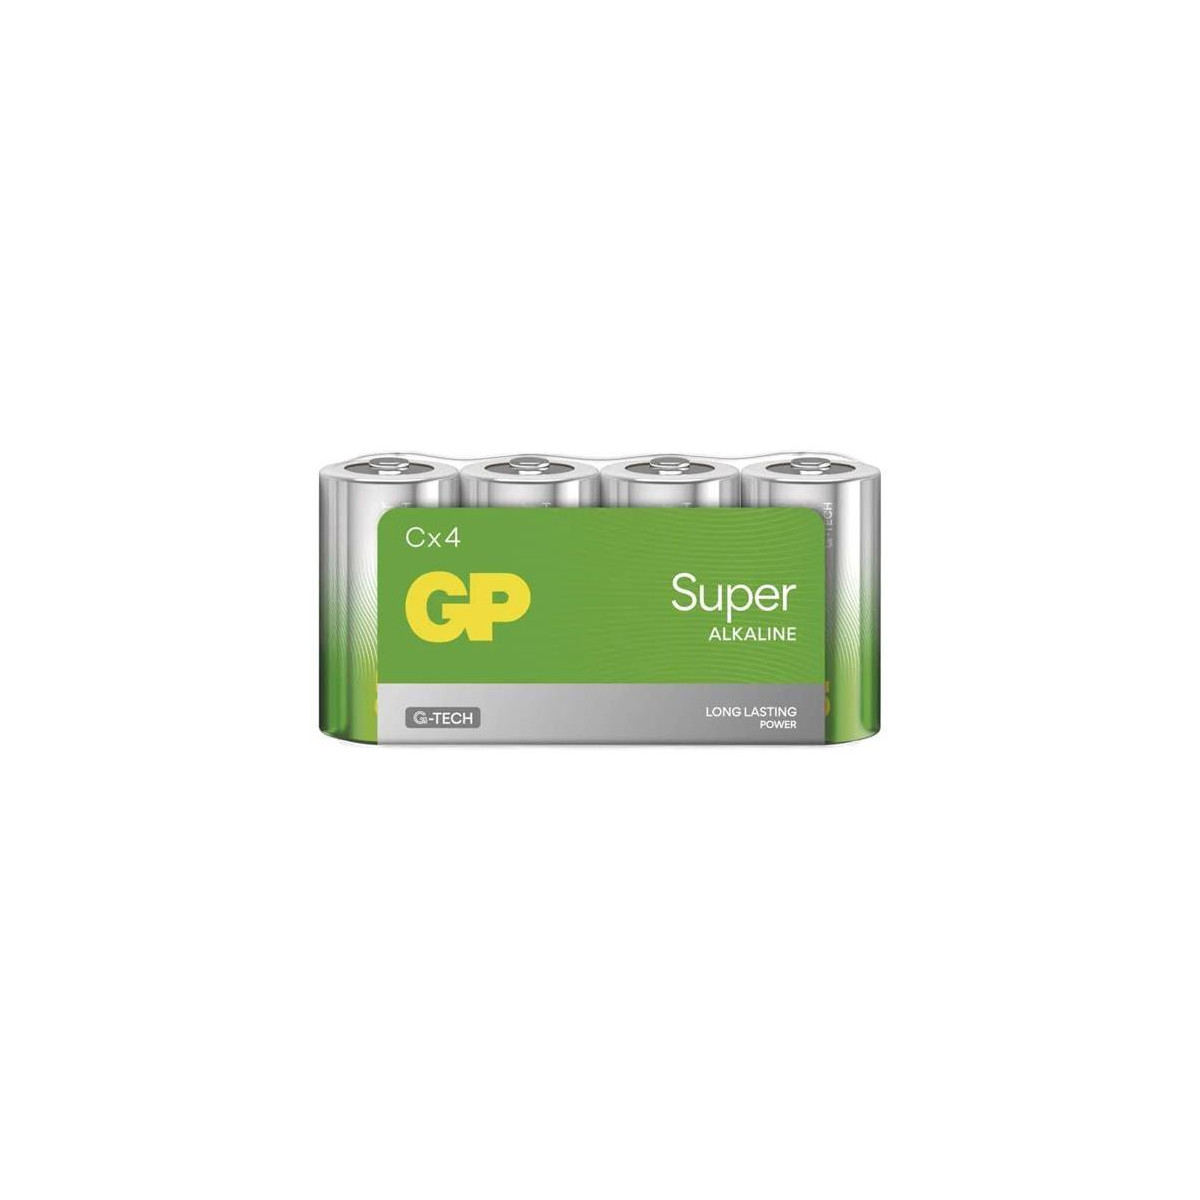 More about Baterie C (R14) alkalická GP Super 4ks